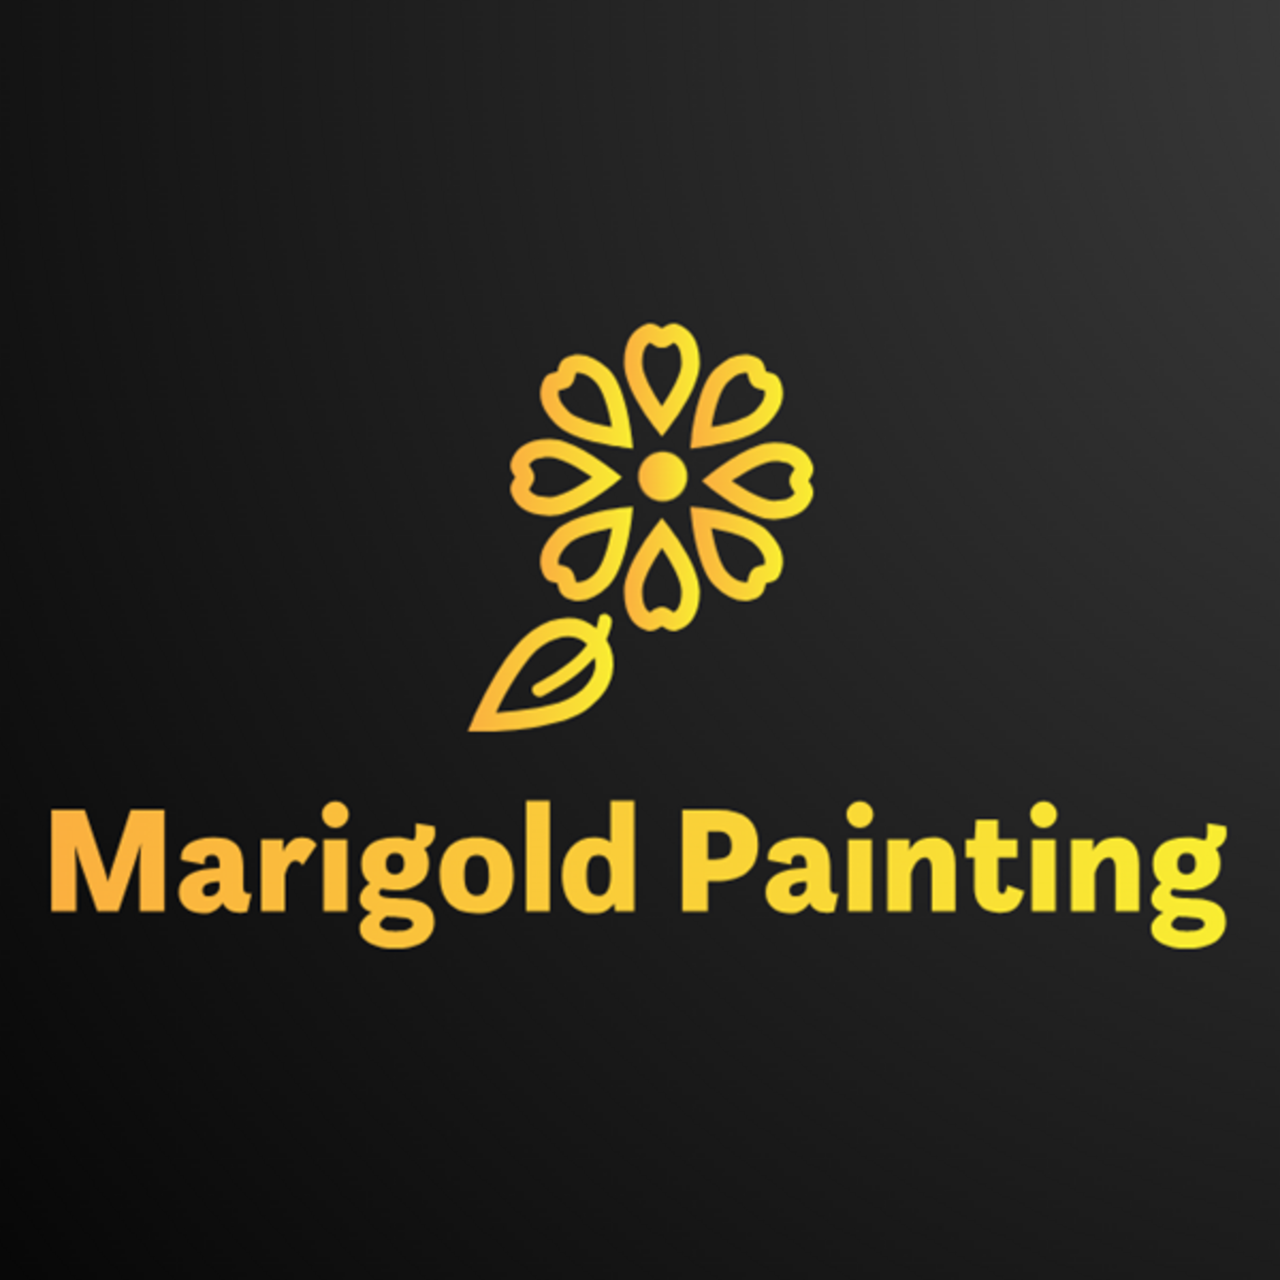 Marigold paintings Ltd.'s logo